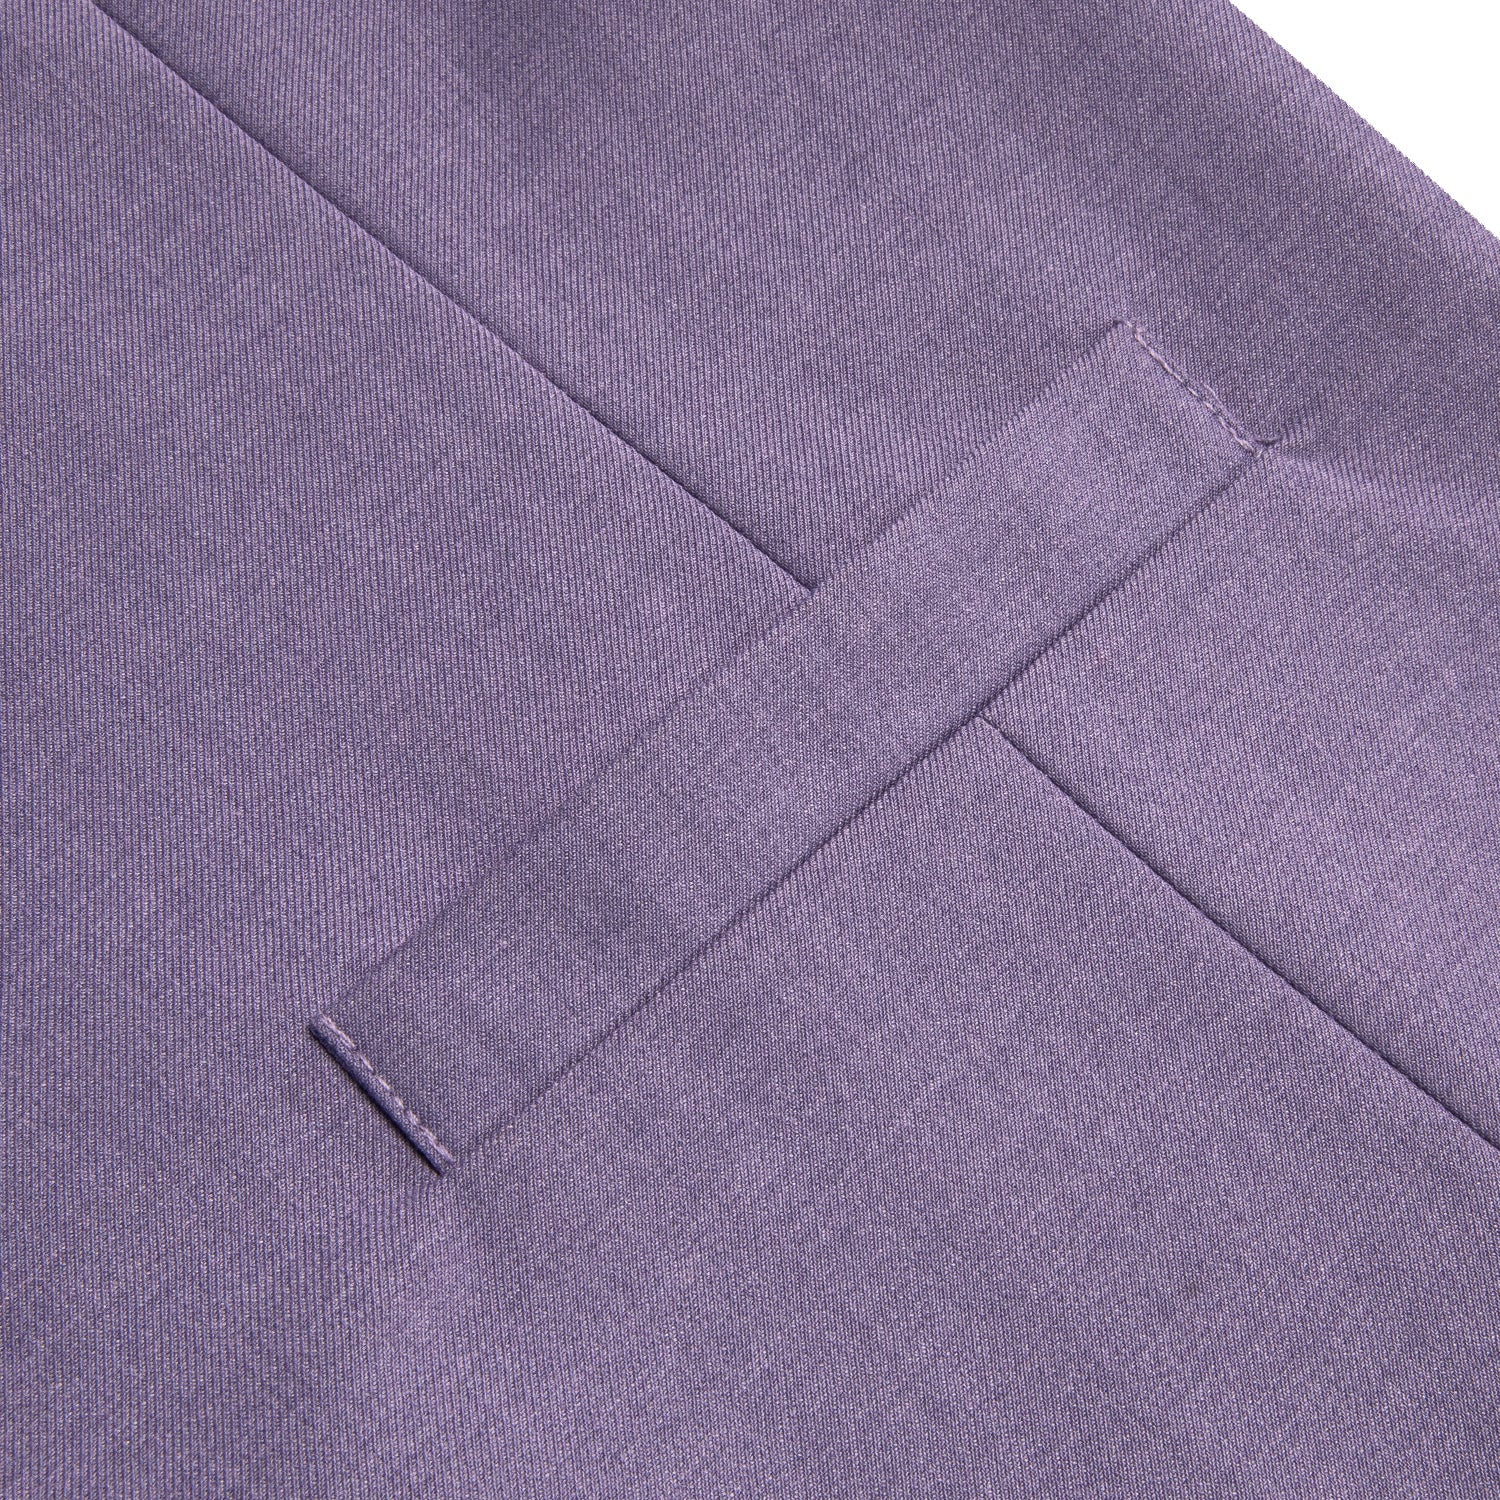 Taro Purple Solid Silk Style Men's Single Vest